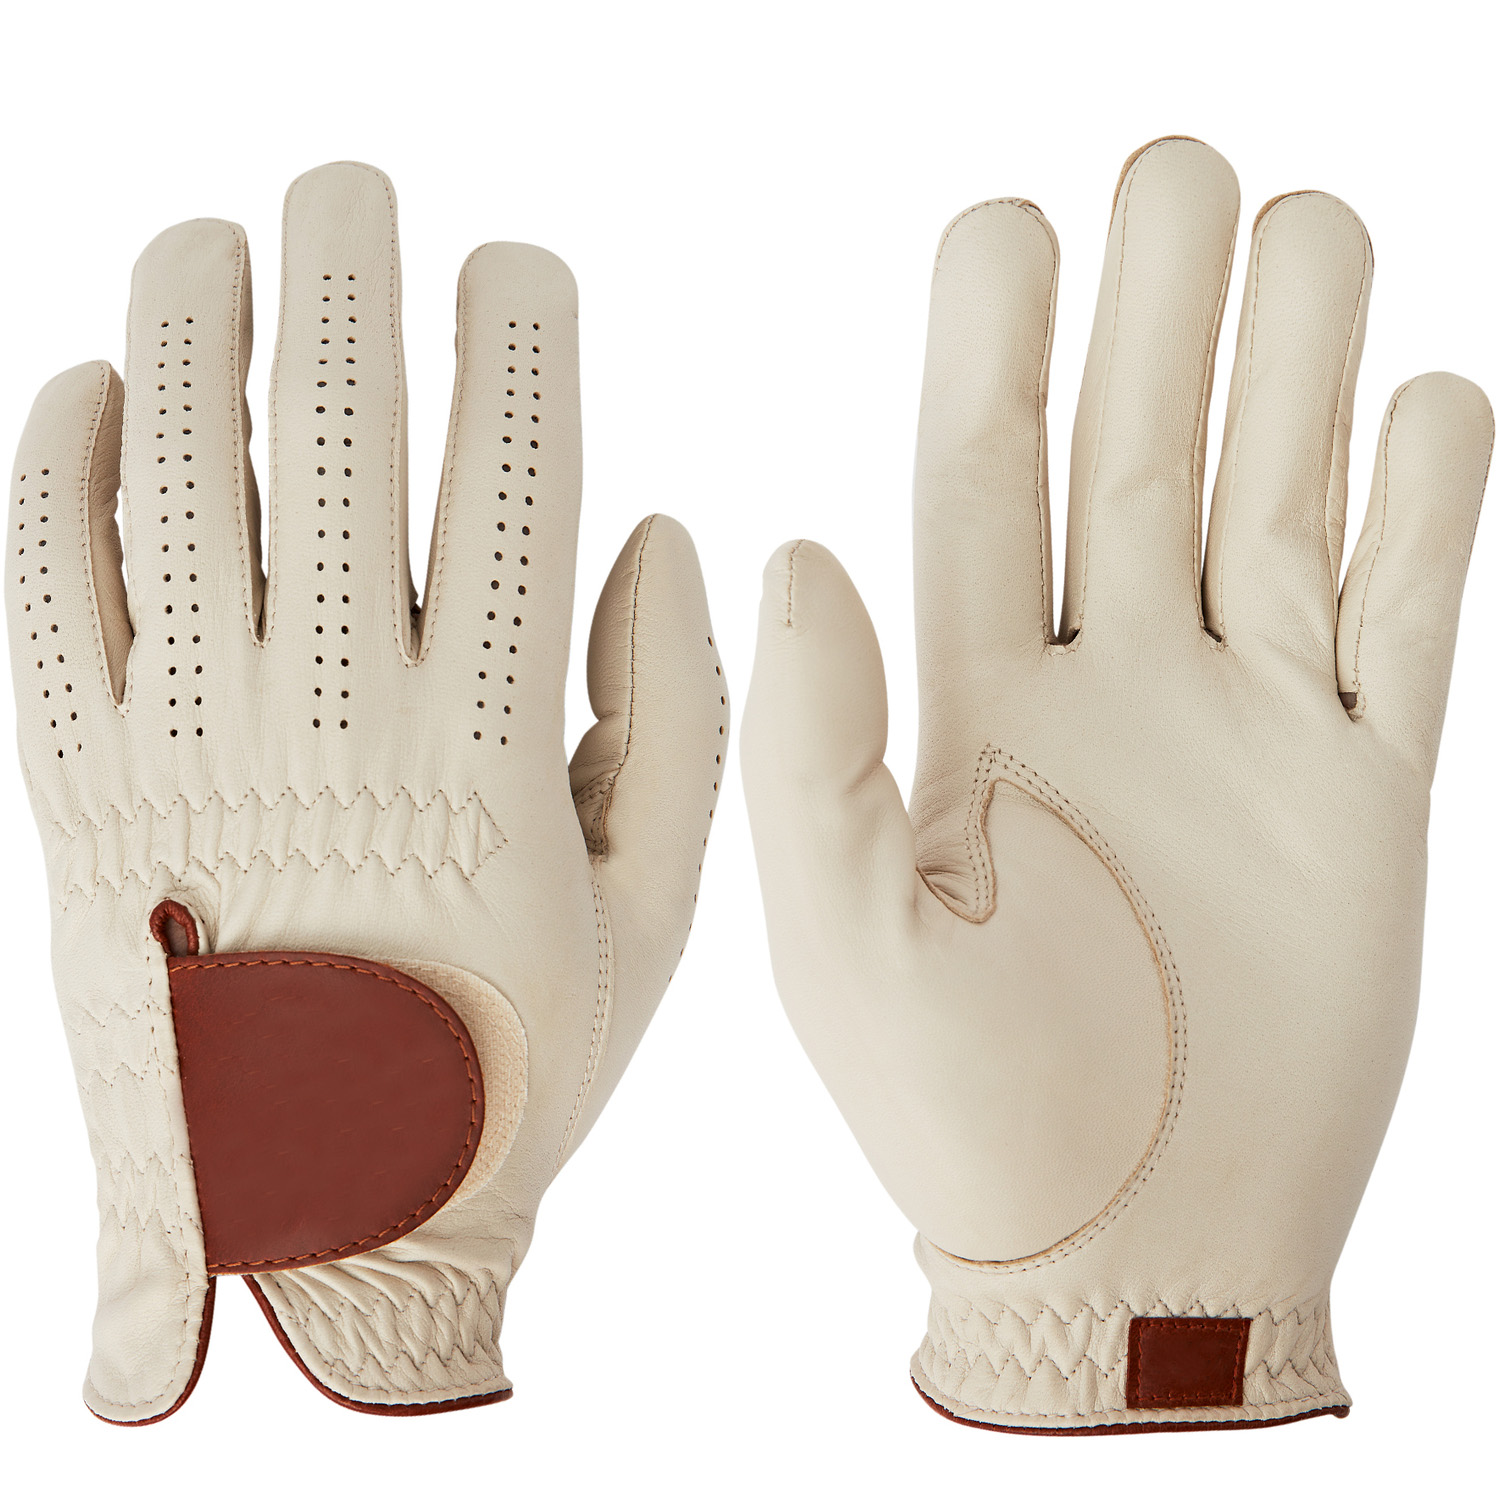 Top A grade high quality cabretta leatherapricote color custom design adult golf glove